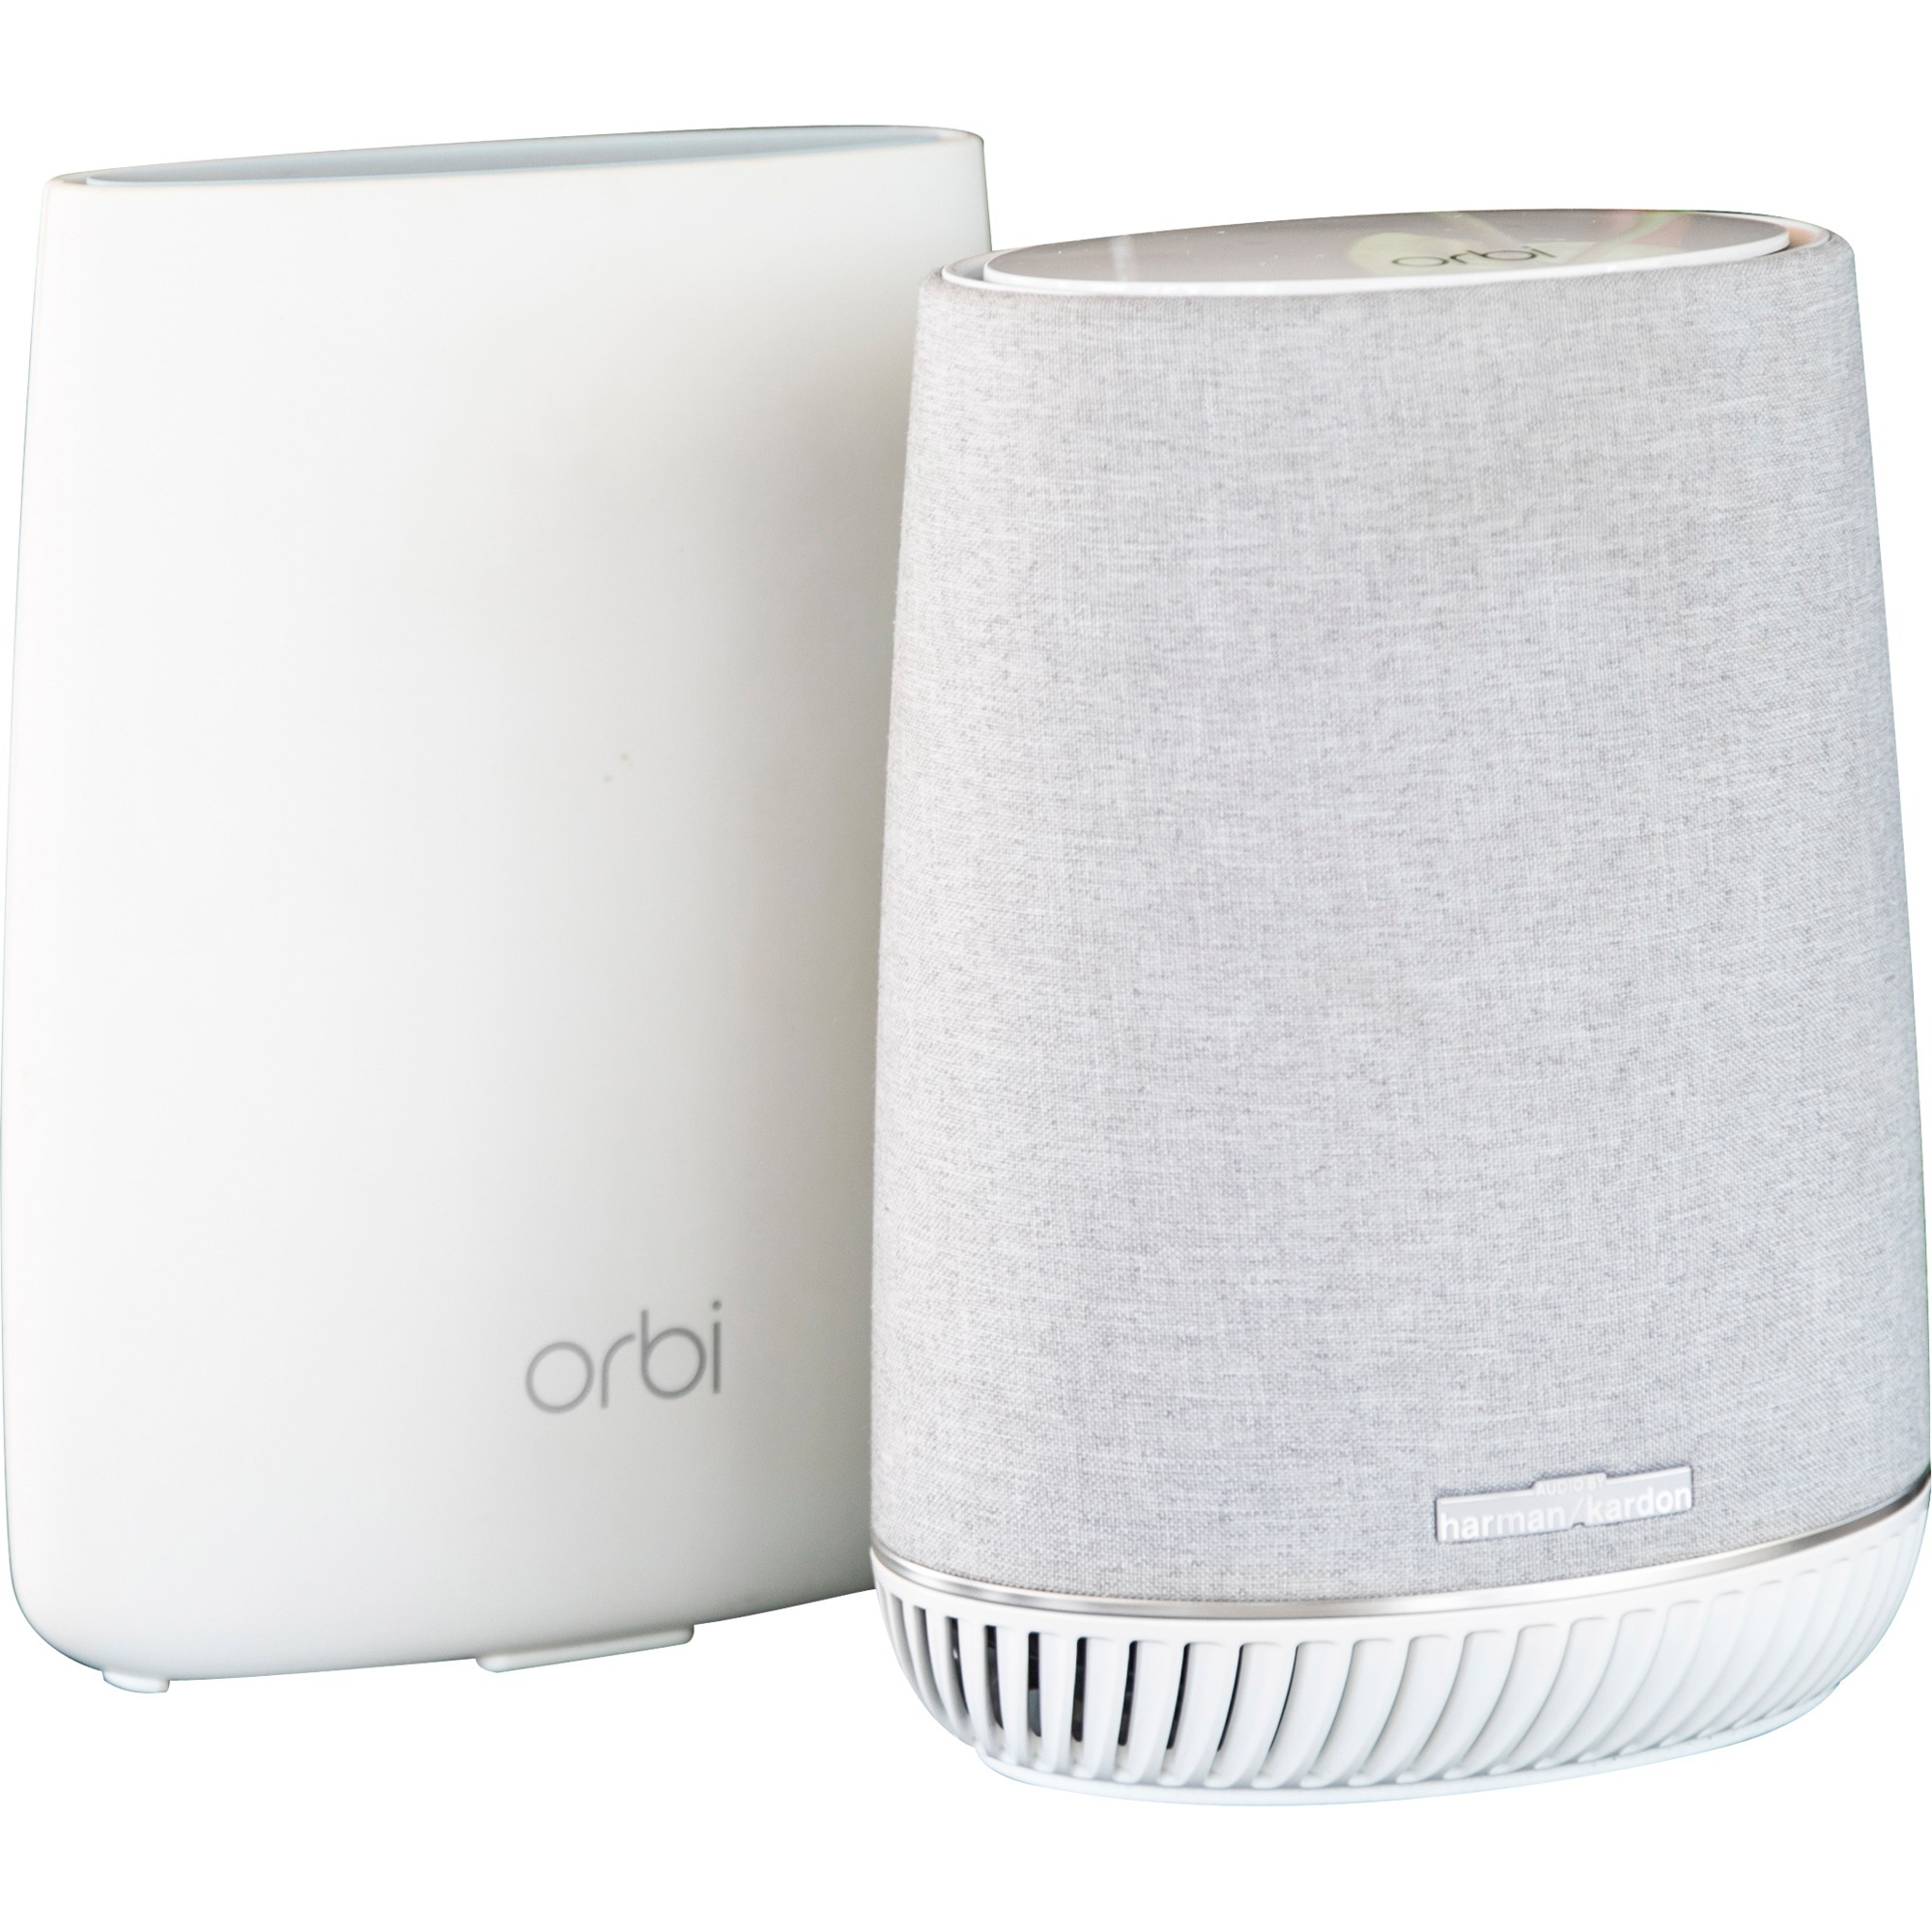 Image of Alternate - Orbi Router + Smart Speaker System RBK50V, Sprachassistent online einkaufen bei Alternate